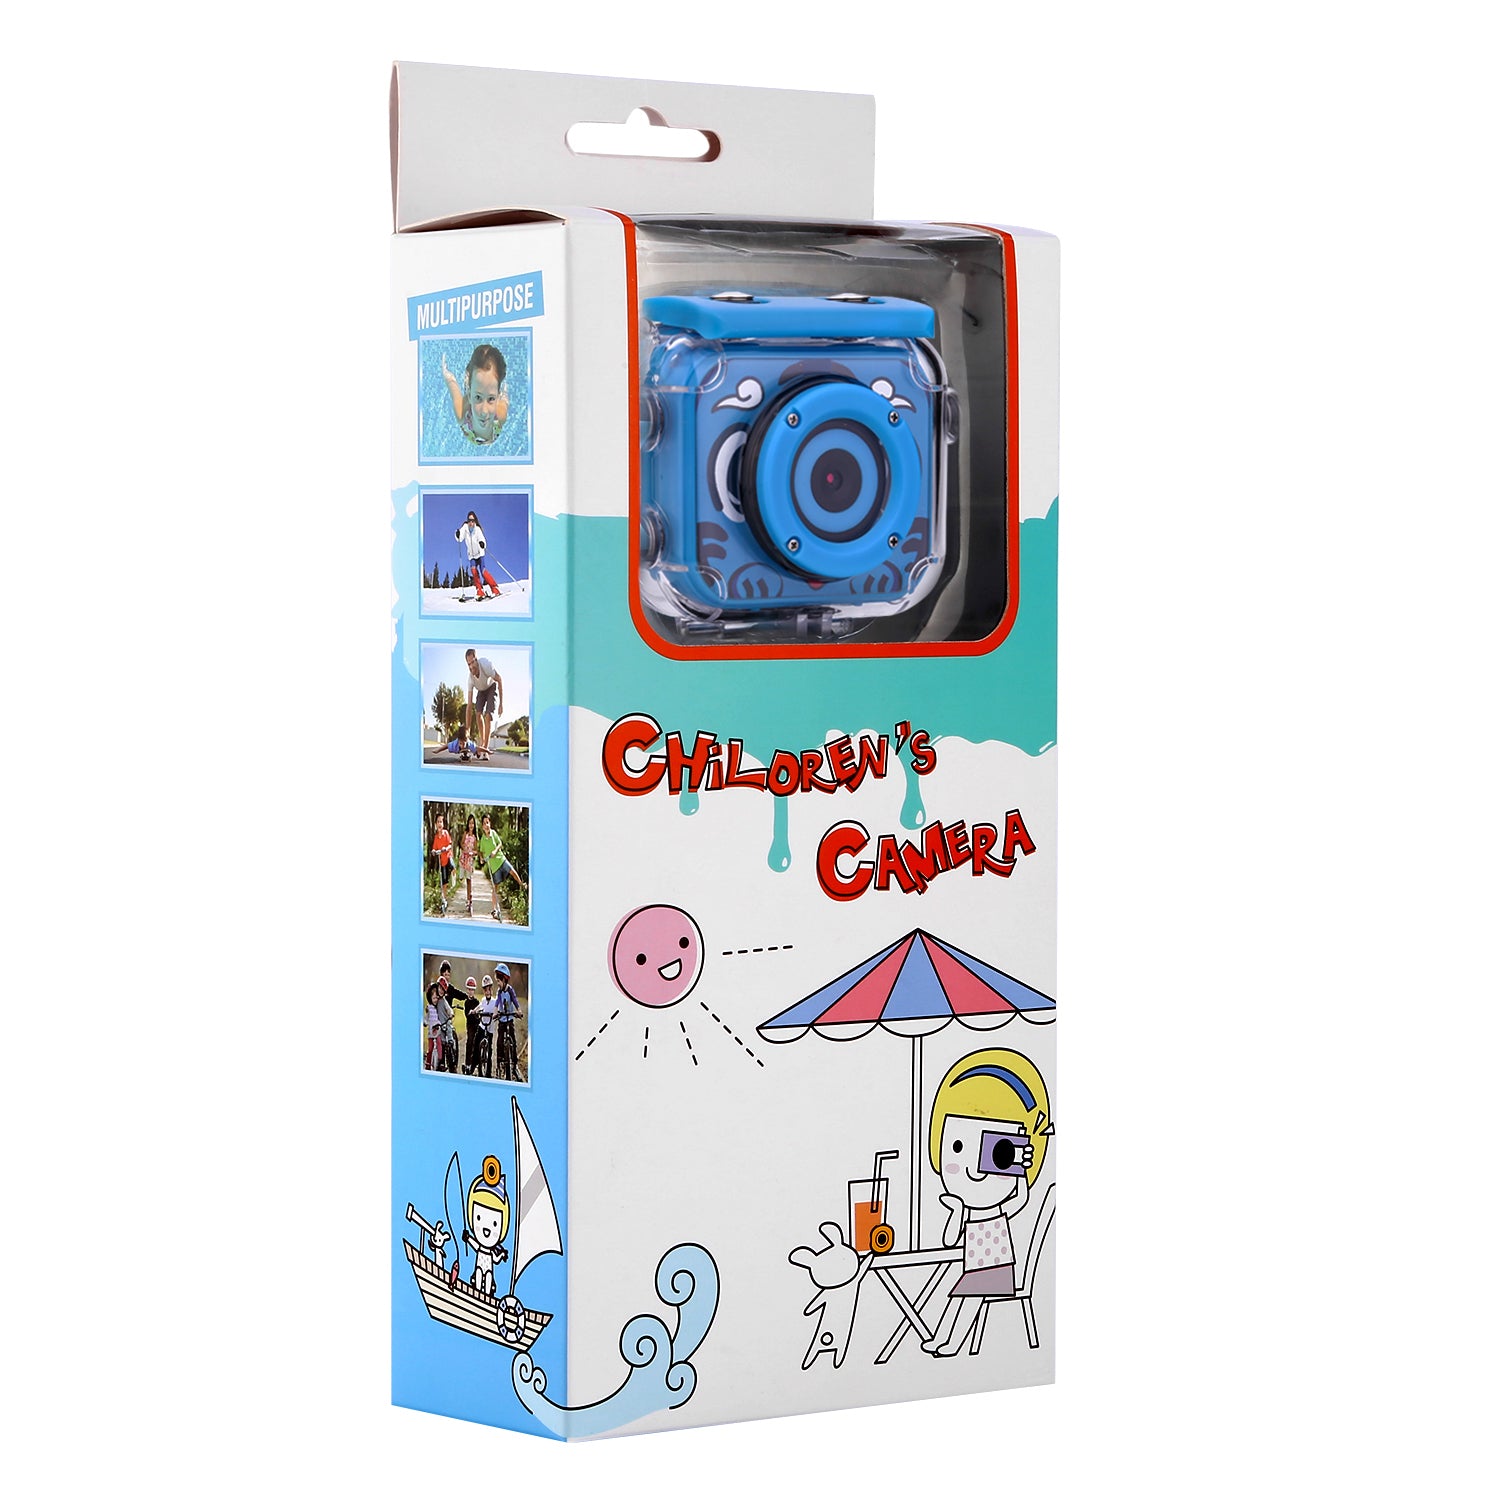 Children's Camera Sports  1080P Waterproof HD Video Capture